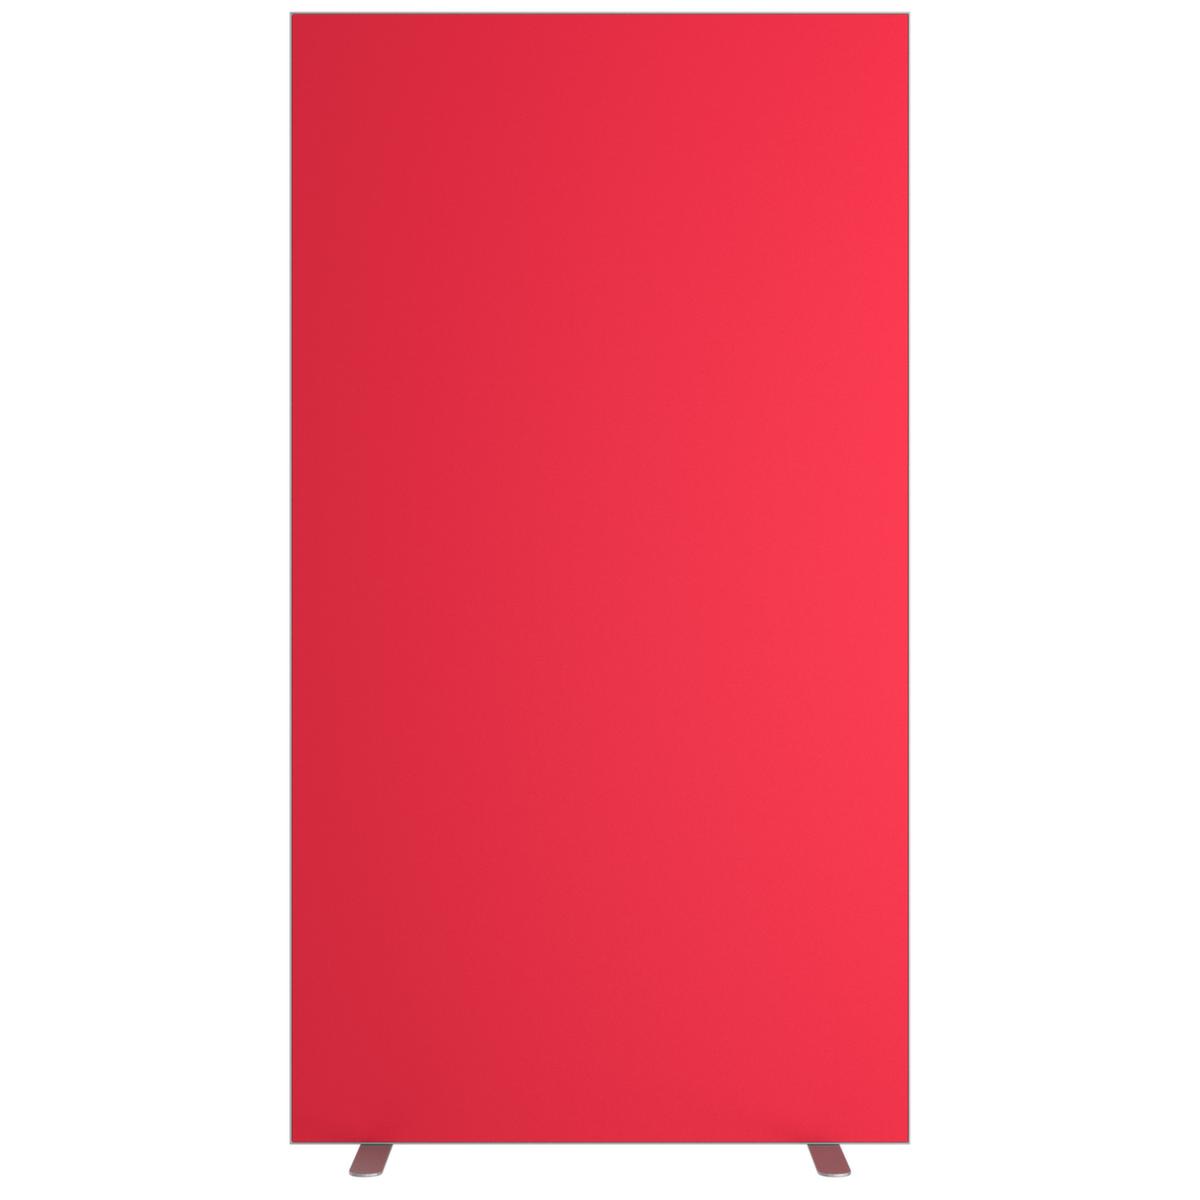 Paperflow Trennwand mit beidseitigem Stoffbezug, Höhe x Breite 1740 x 940 mm, Wand rot Standard 1 ZOOM